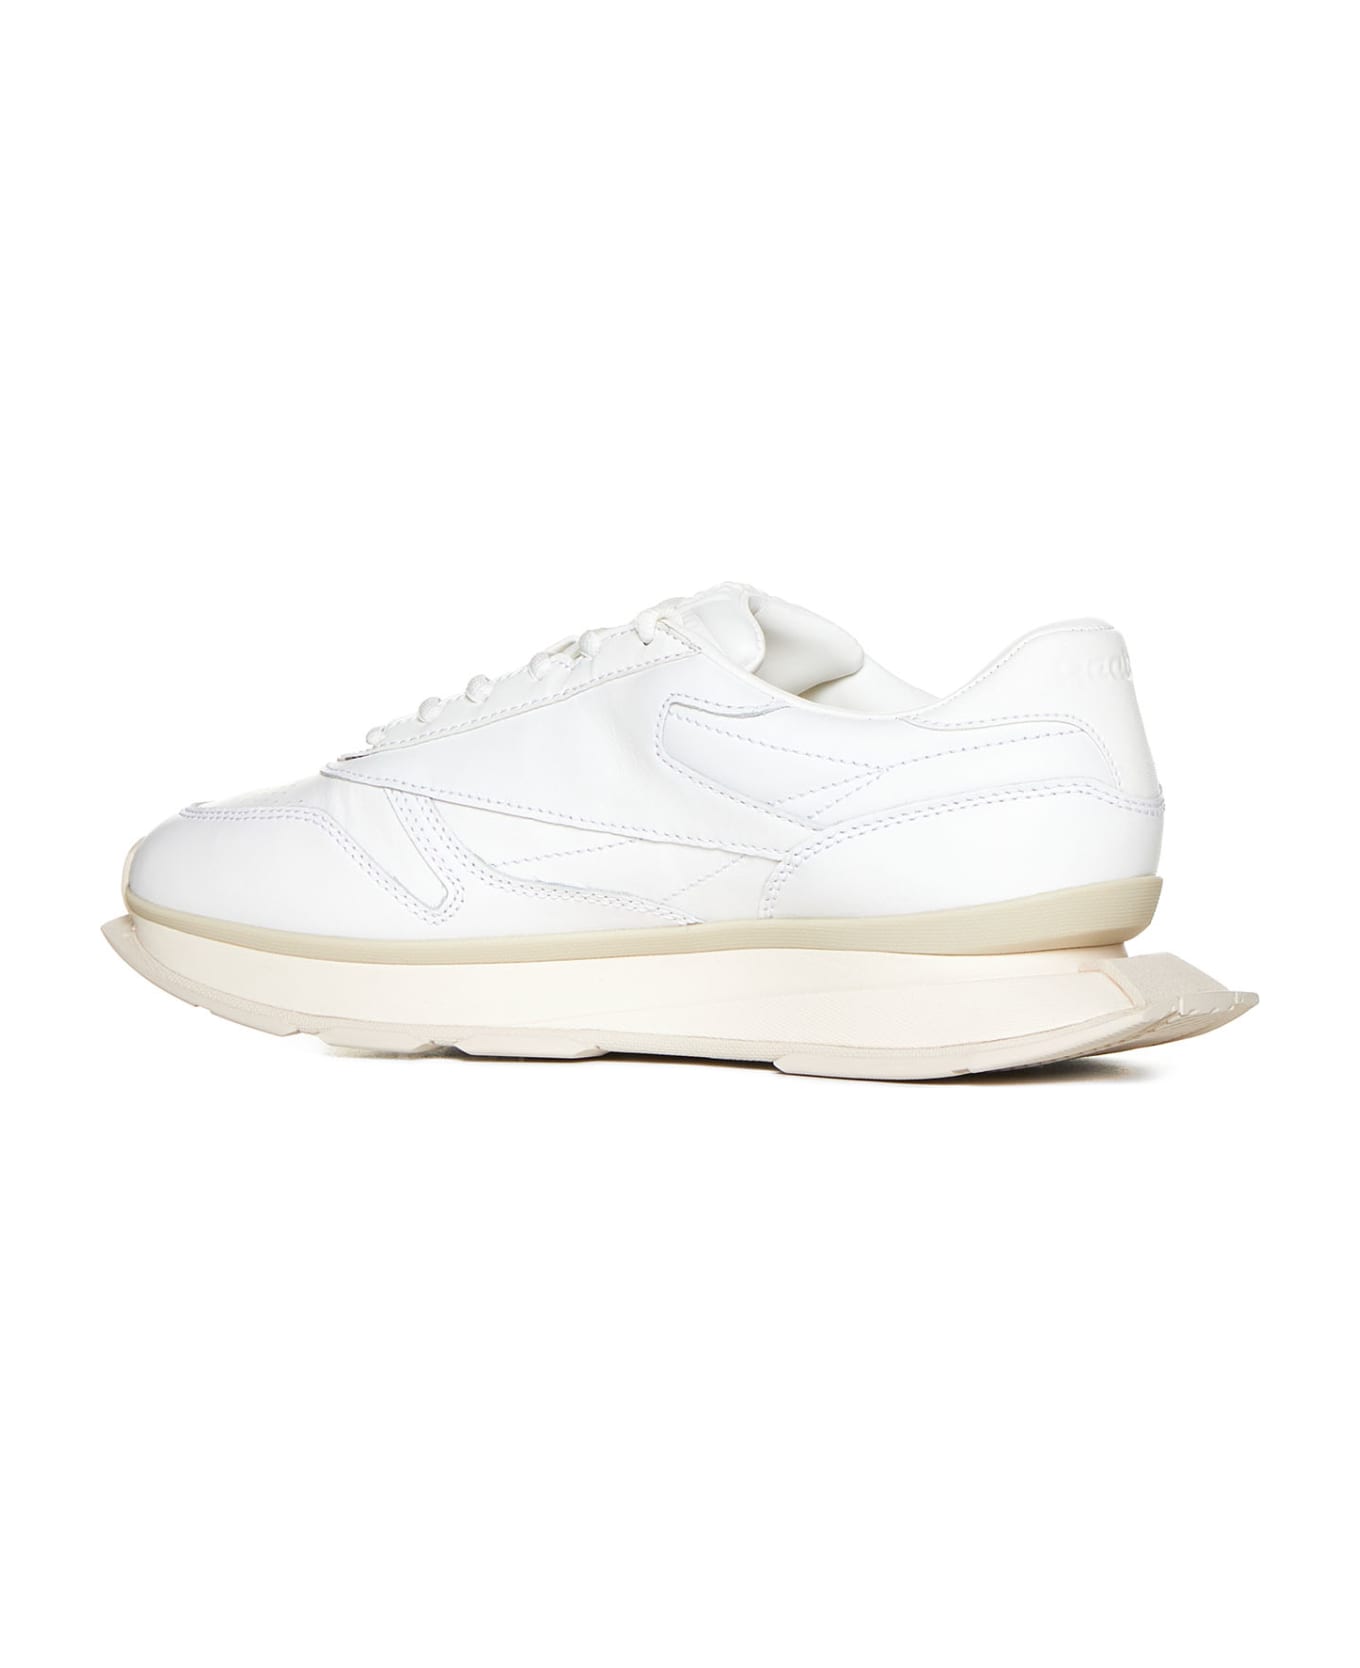 Reebok Sneakers - White lthr